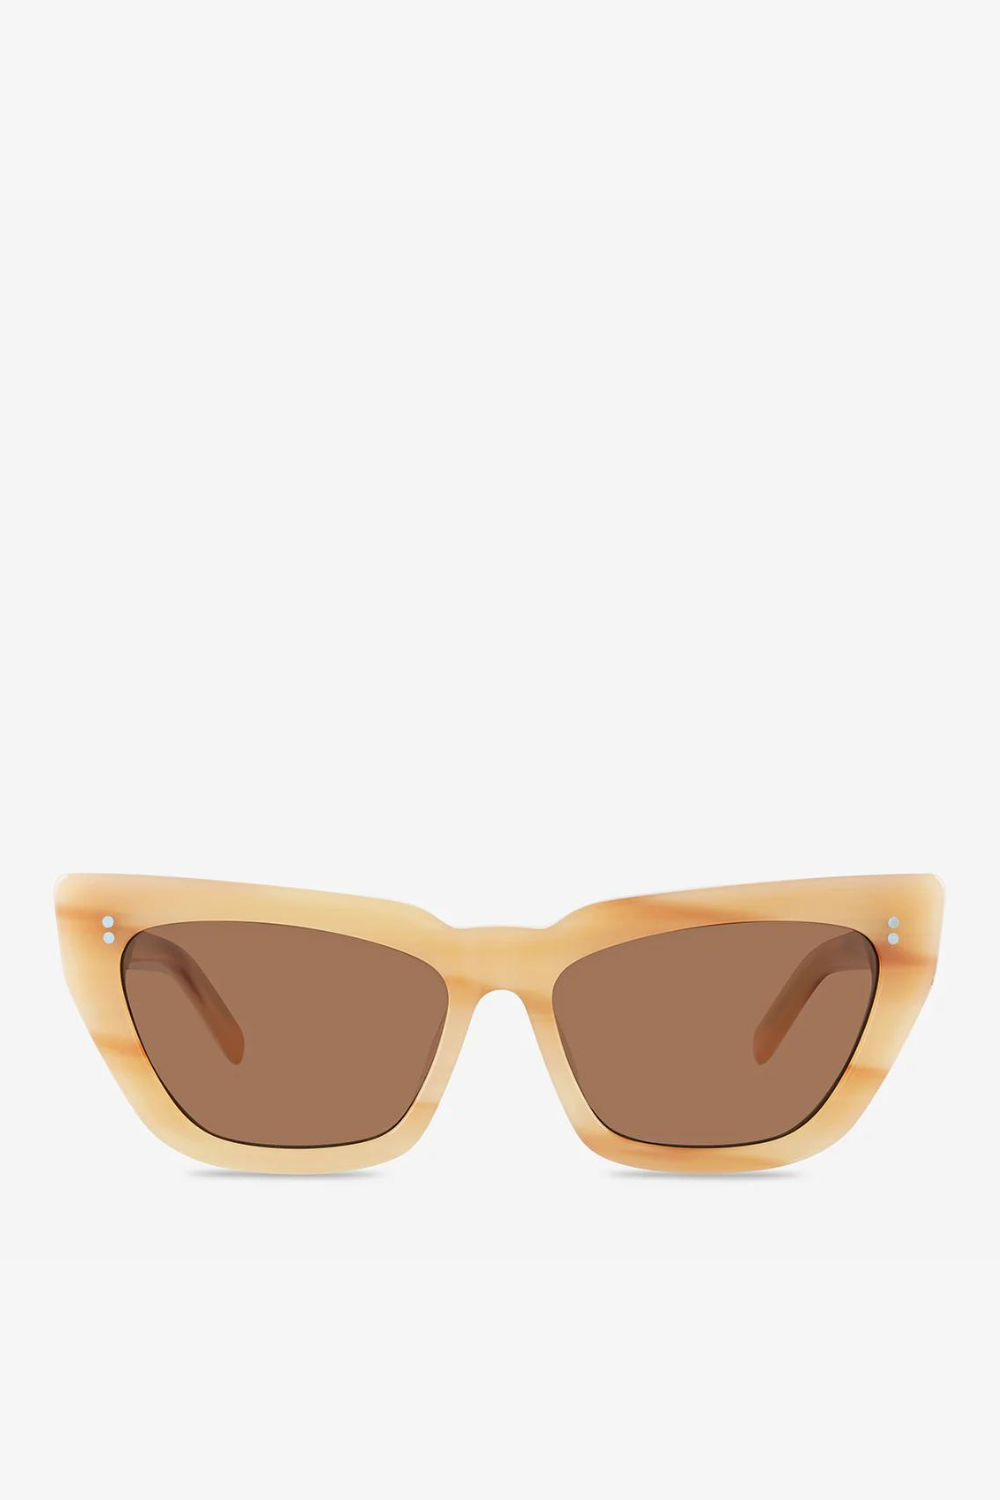 Desolate Sunglasses in Blonde